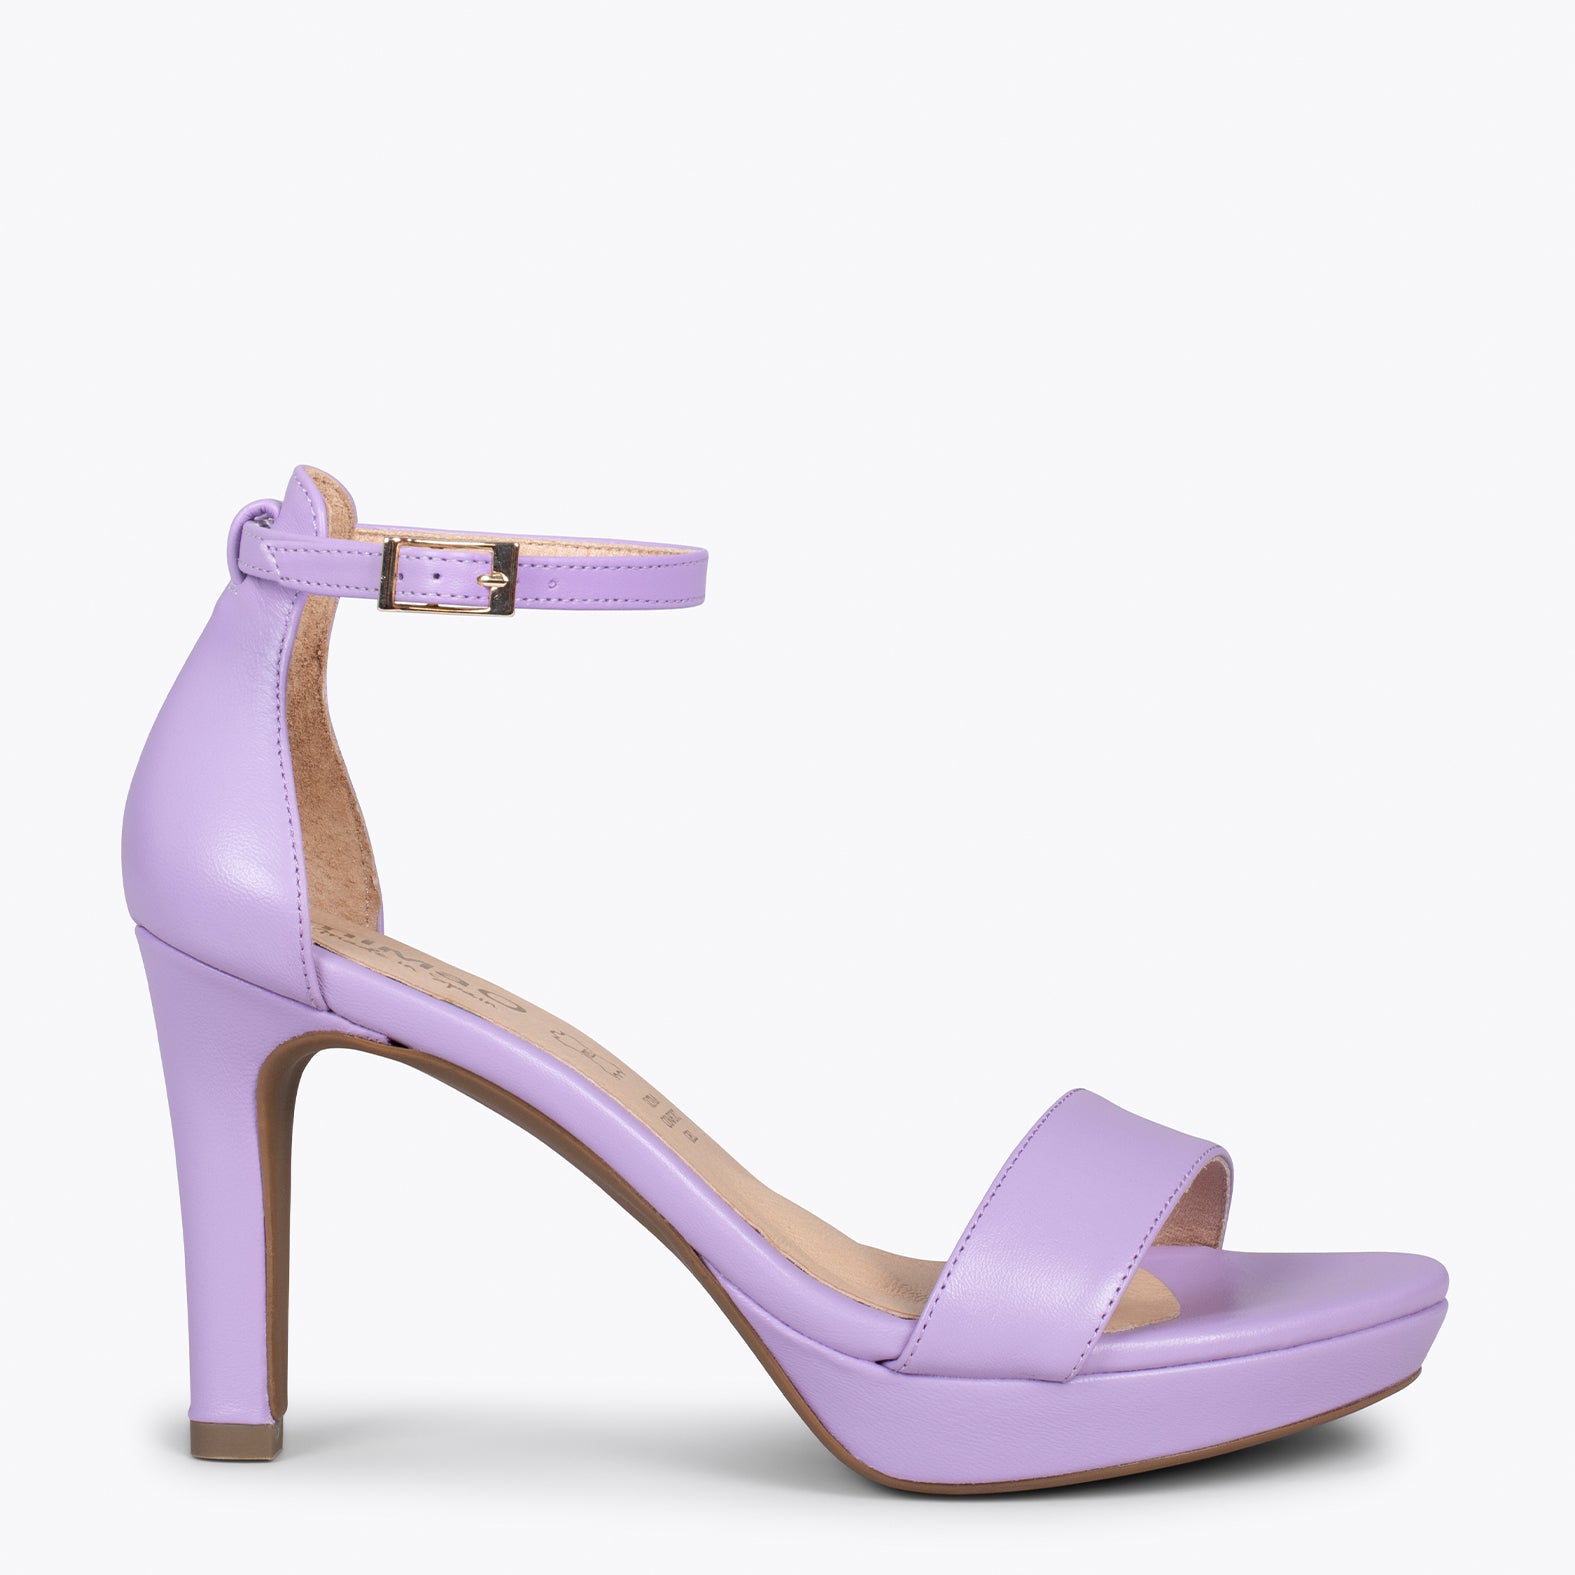 PARTY – LAVENDER high heel sandals with platform